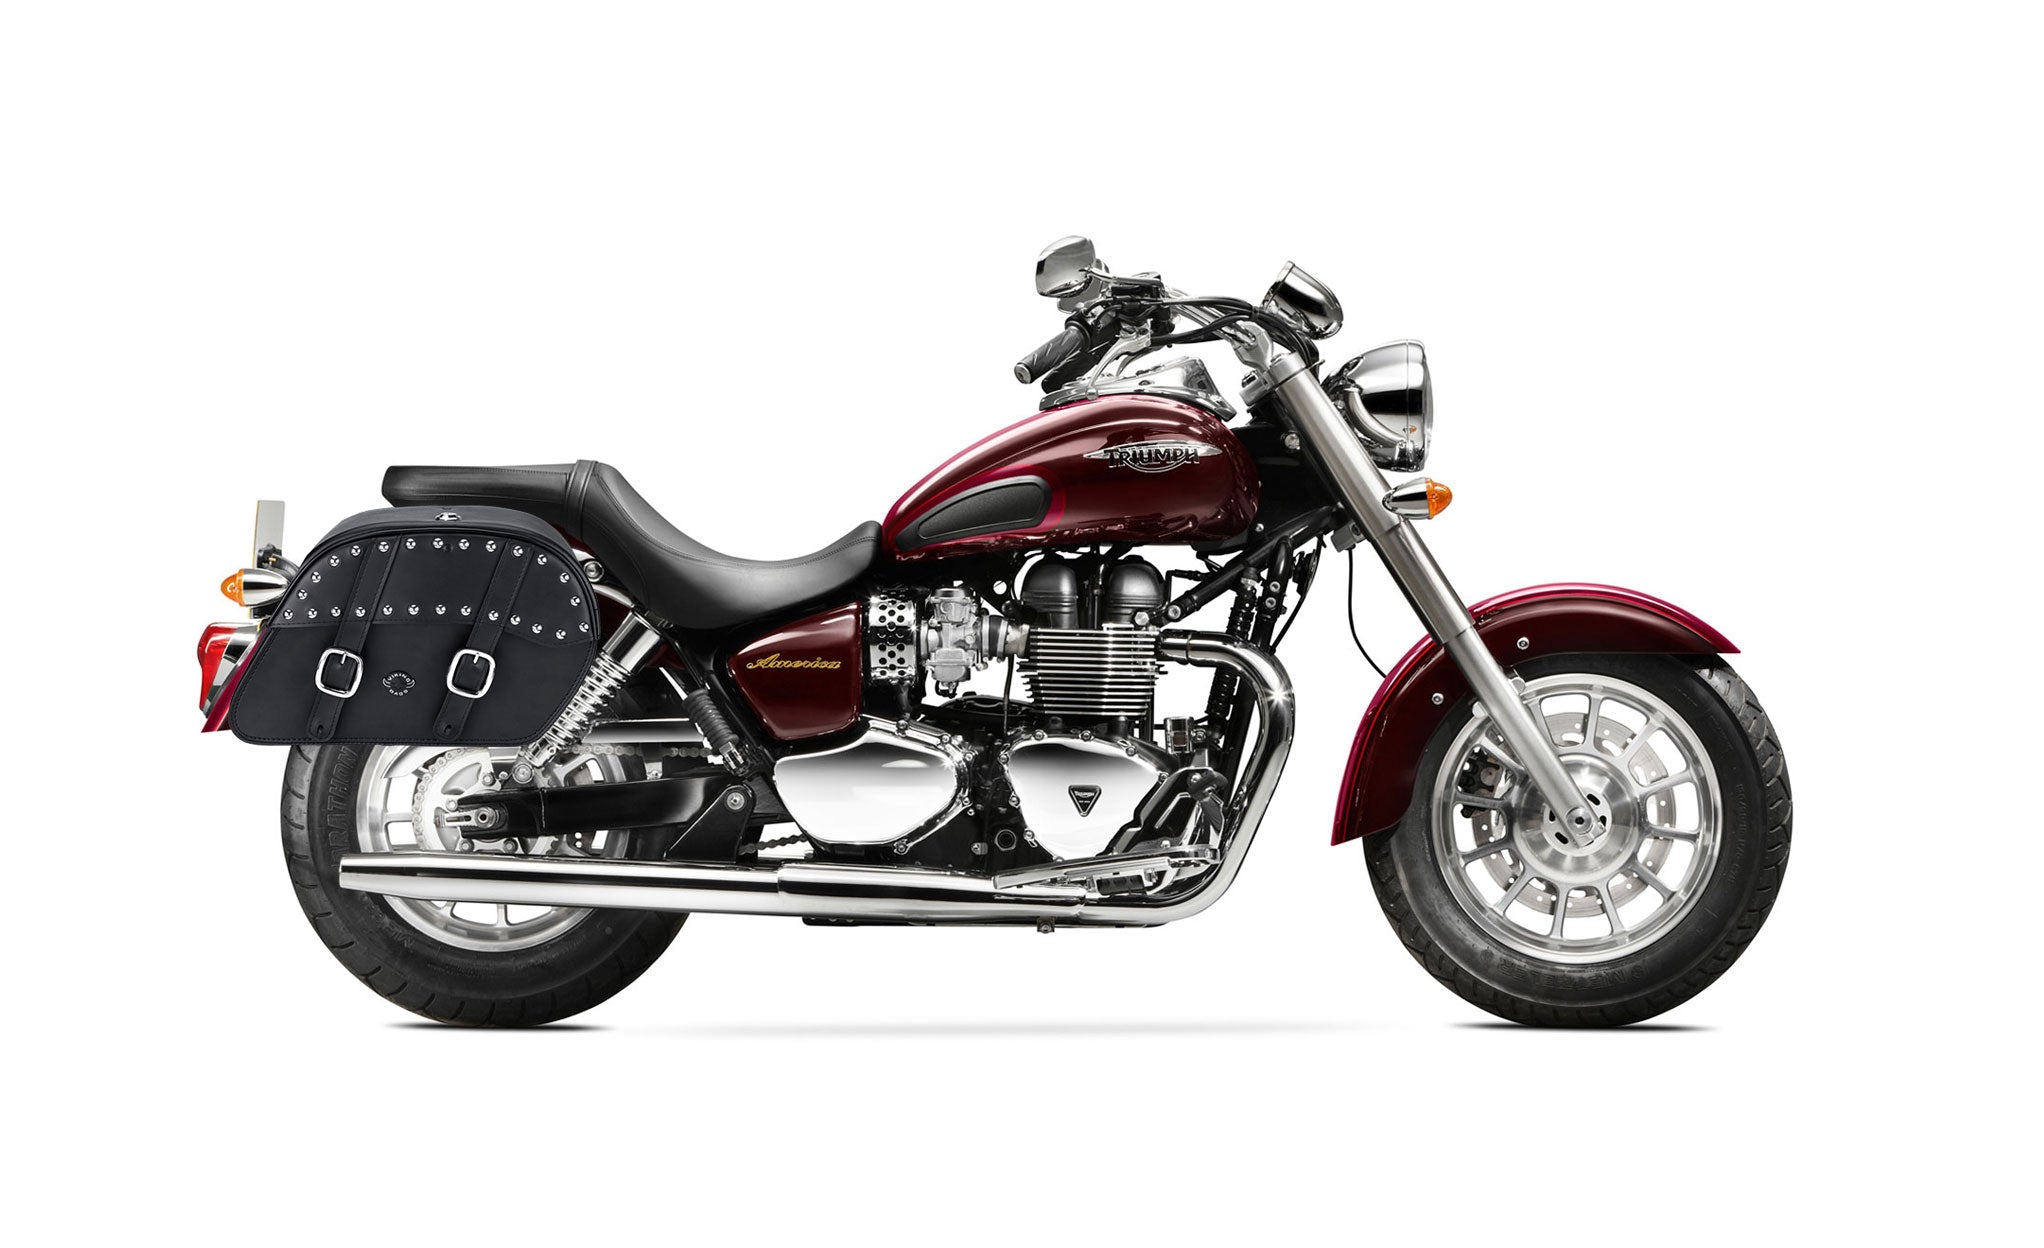 Viking Skarner Large Triumph America Leather Studded Motorcycle Saddlebags on Bike Photo @expand